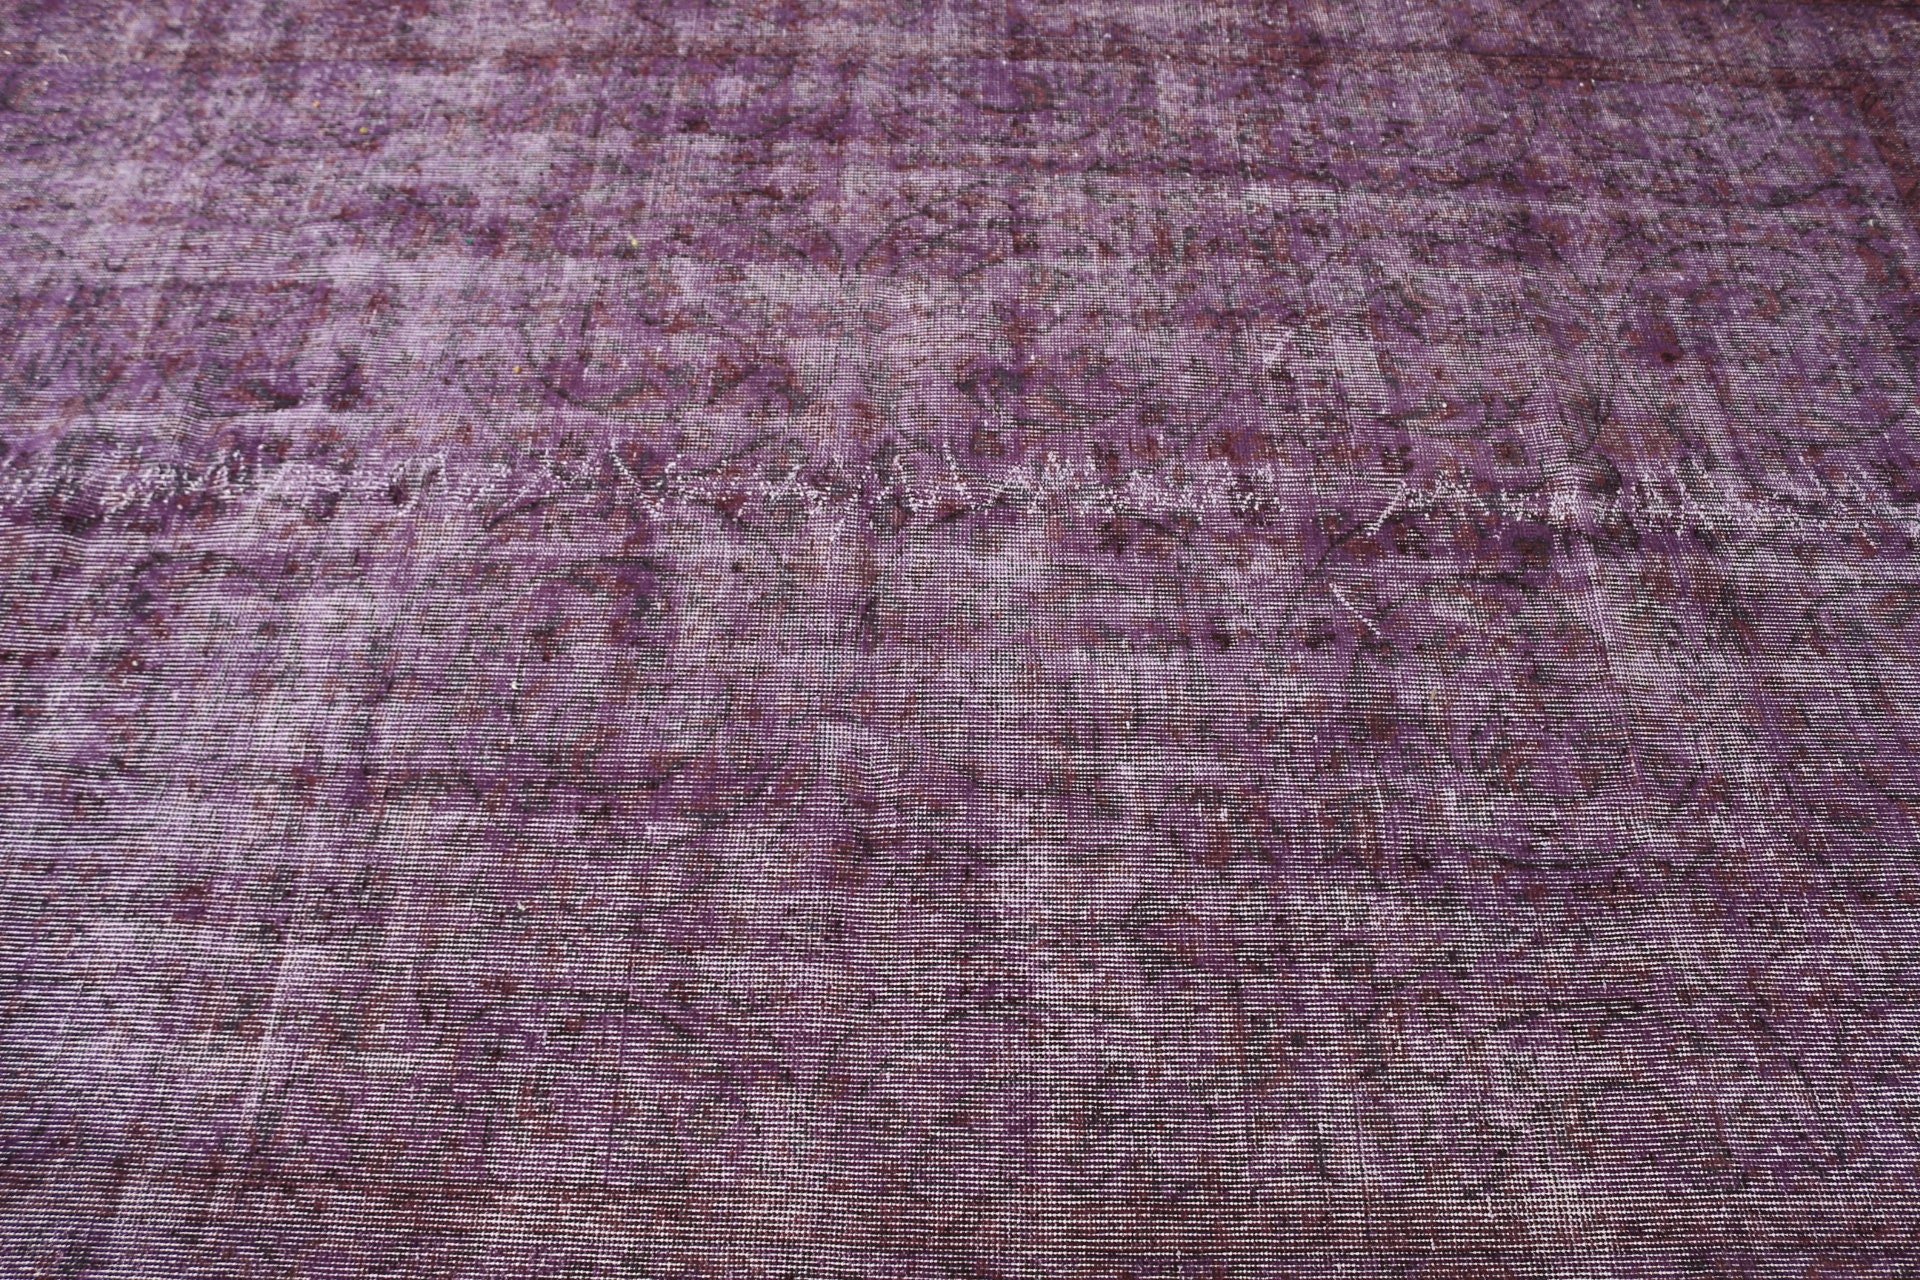 Vintage Rug, Wool Rugs, Salon Rugs, Home Decor Rugs, Rugs for Salon, Bedroom Rugs, Purple  5.8x9.1 ft Large Rug, Turkish Rugs